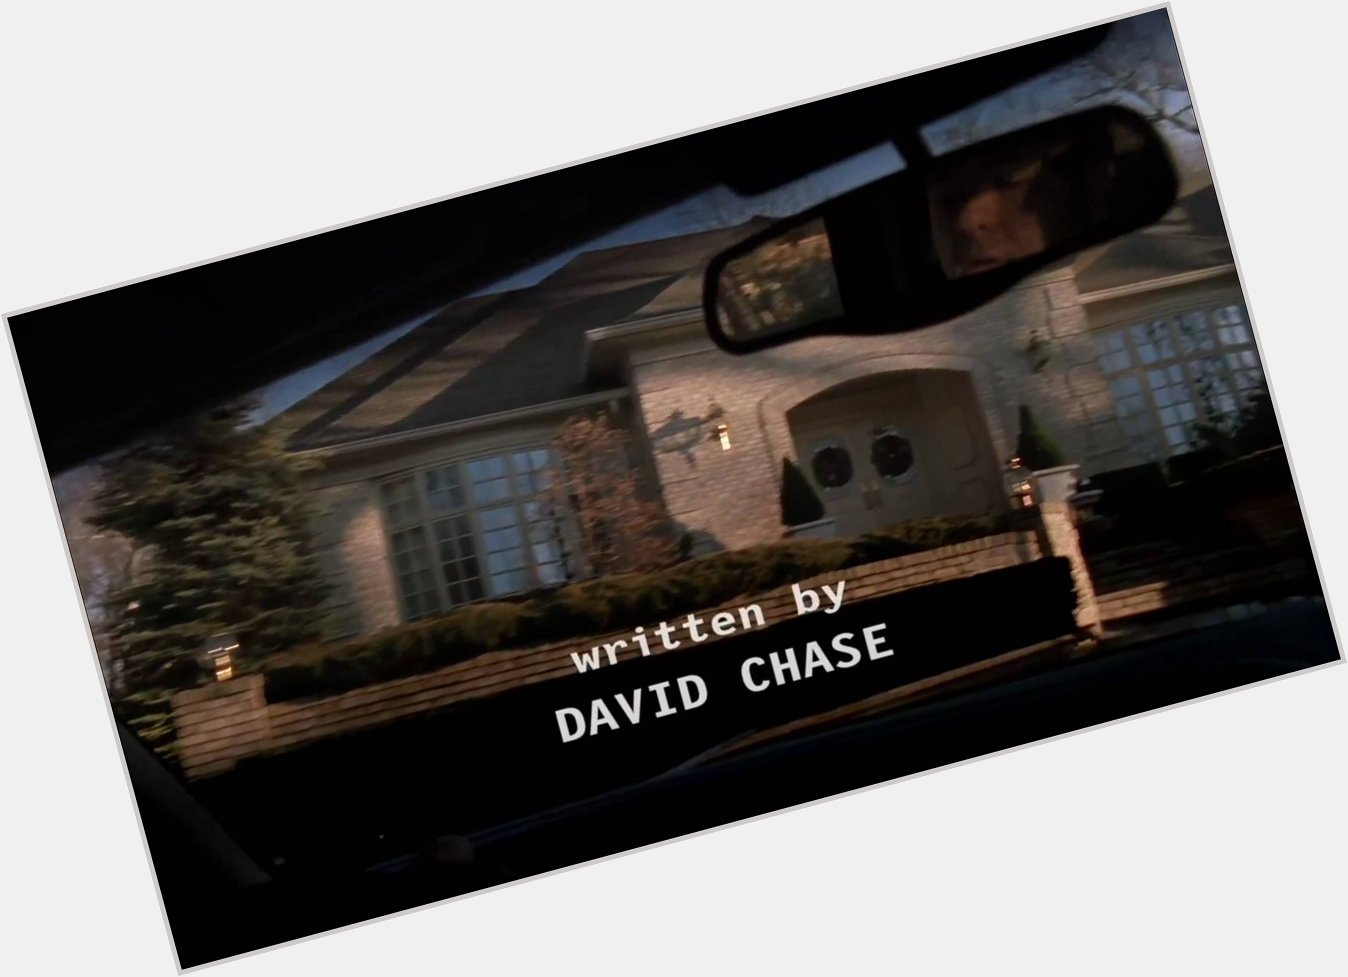 Happy 73rd birthday to David Chase. 